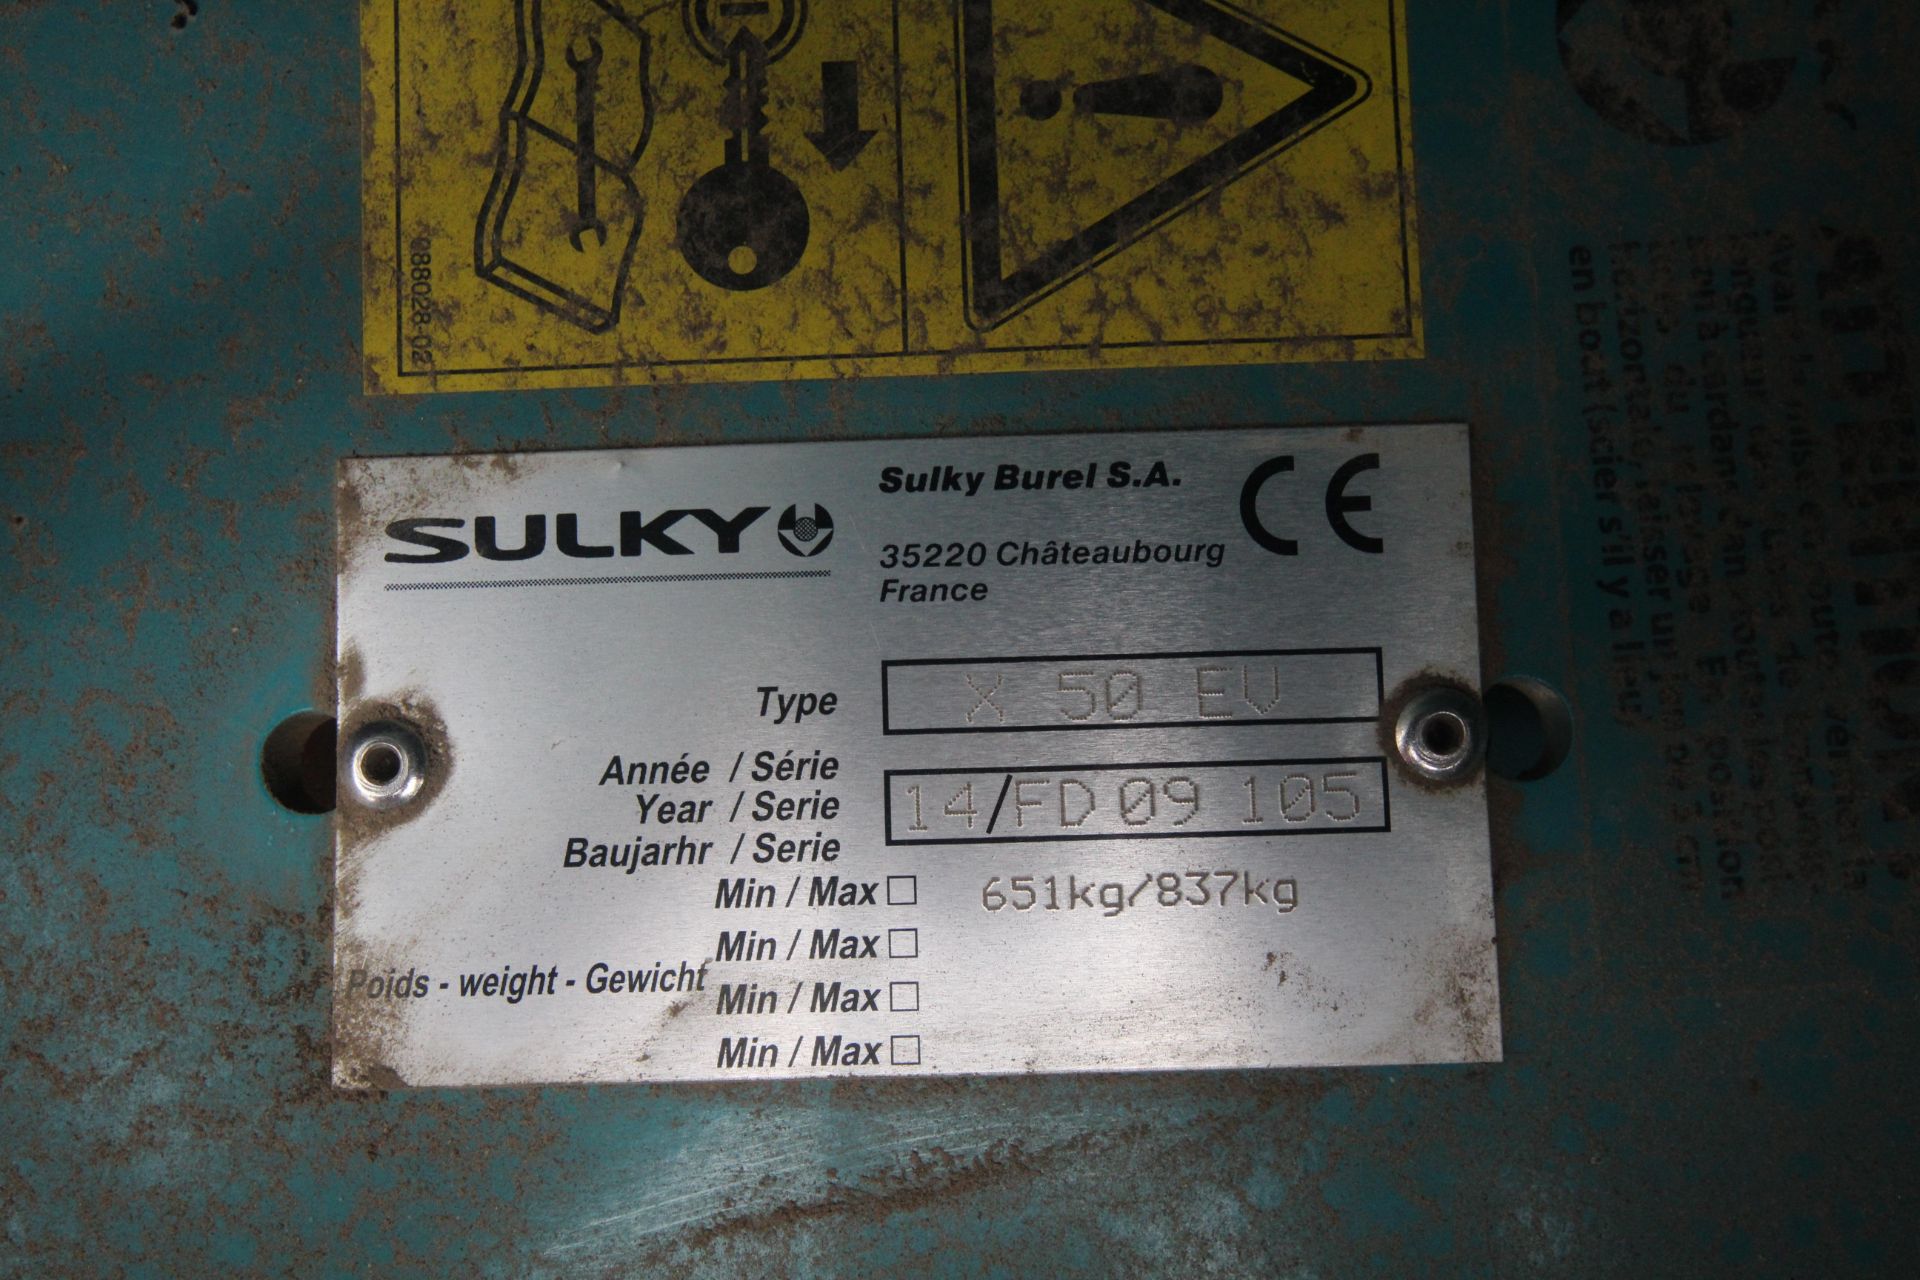 **UPDATED DESCRIPTION** Reco Sulky X50 Econov 4T twin disc fertiliser spreader. 2014. With hopper - Image 24 of 25